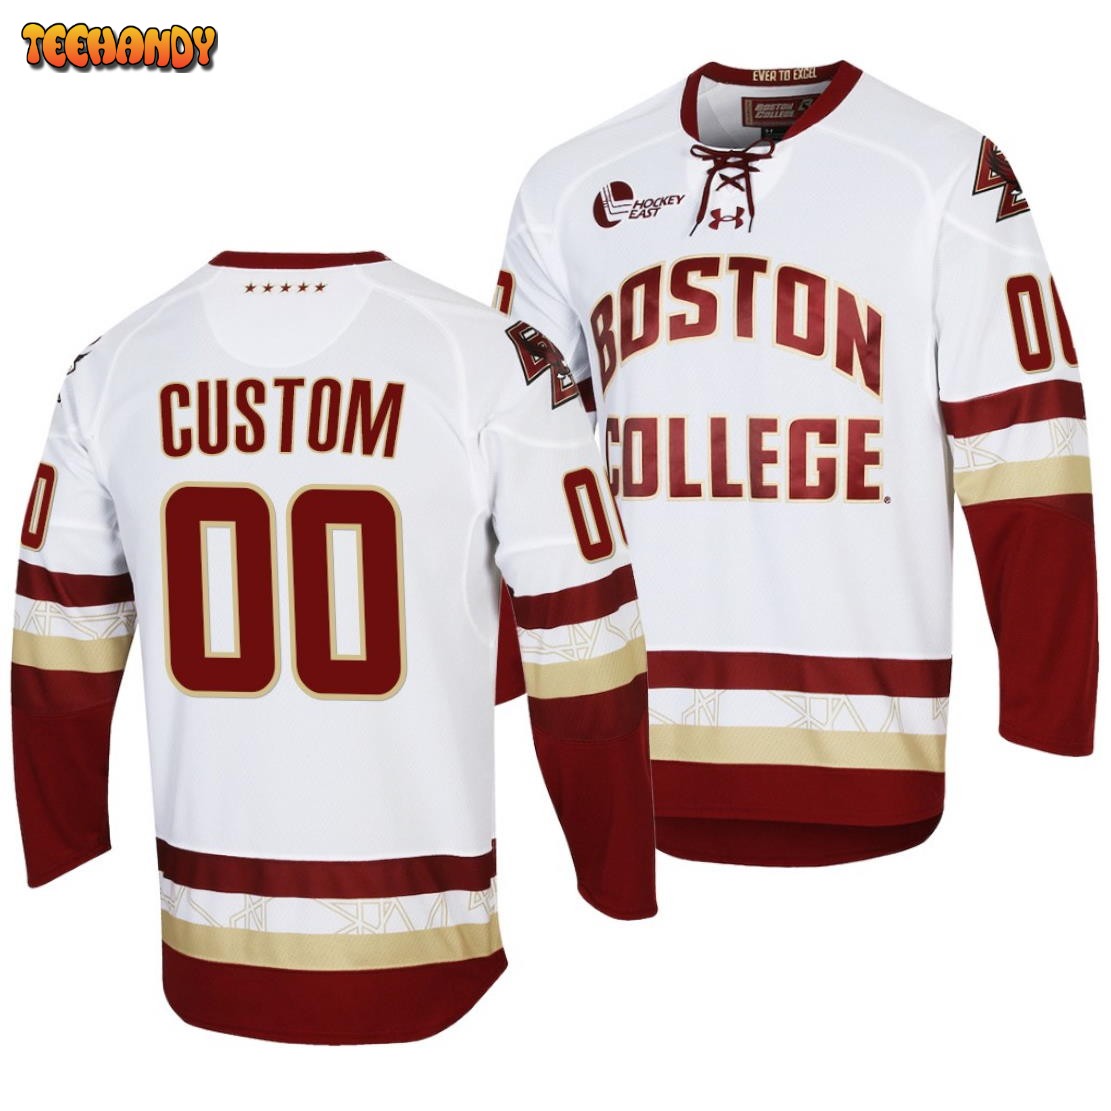 Boston College Eagles Hockey Jersey